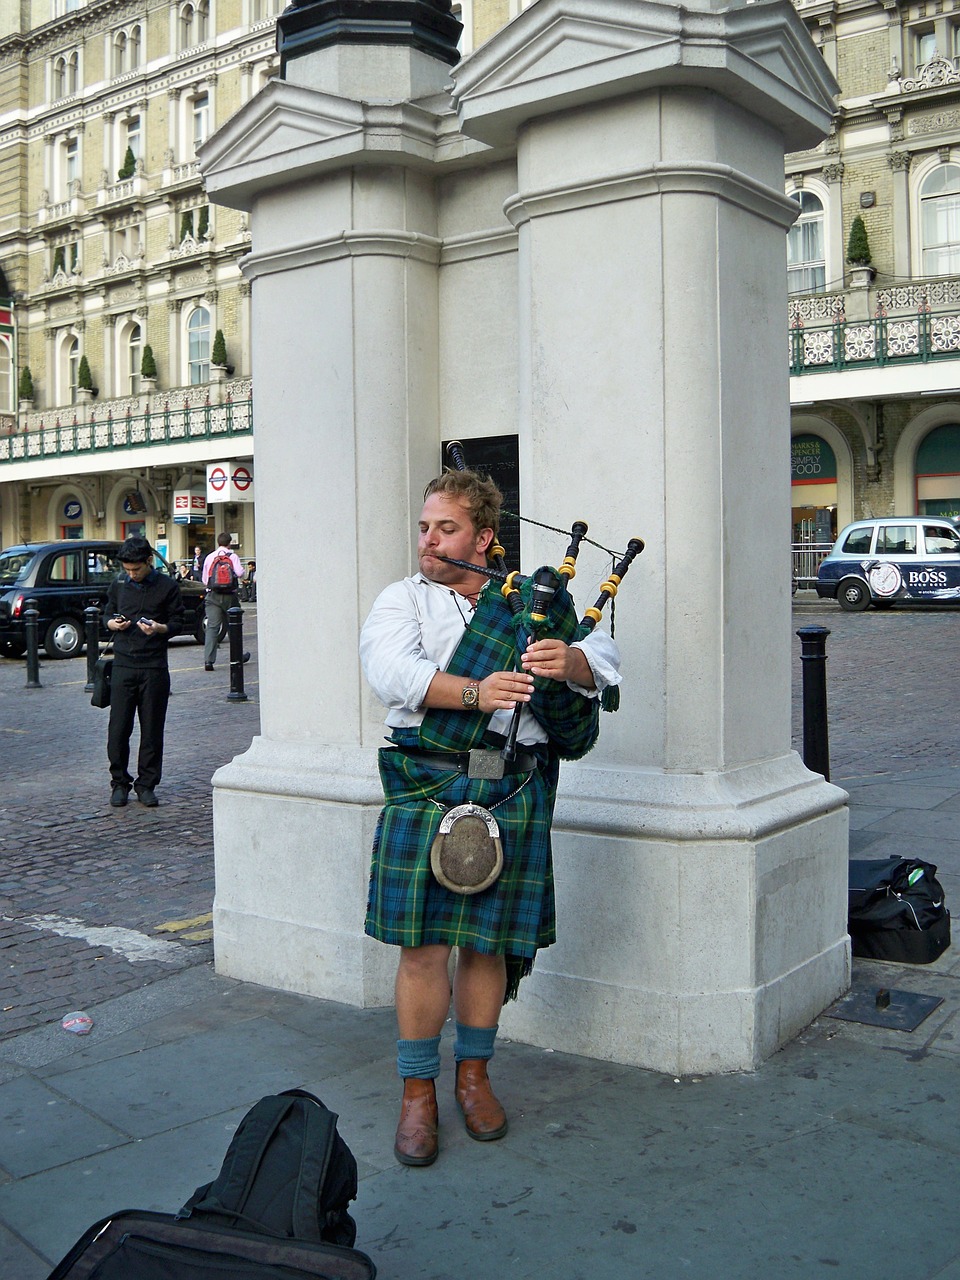 street musicians london free photo